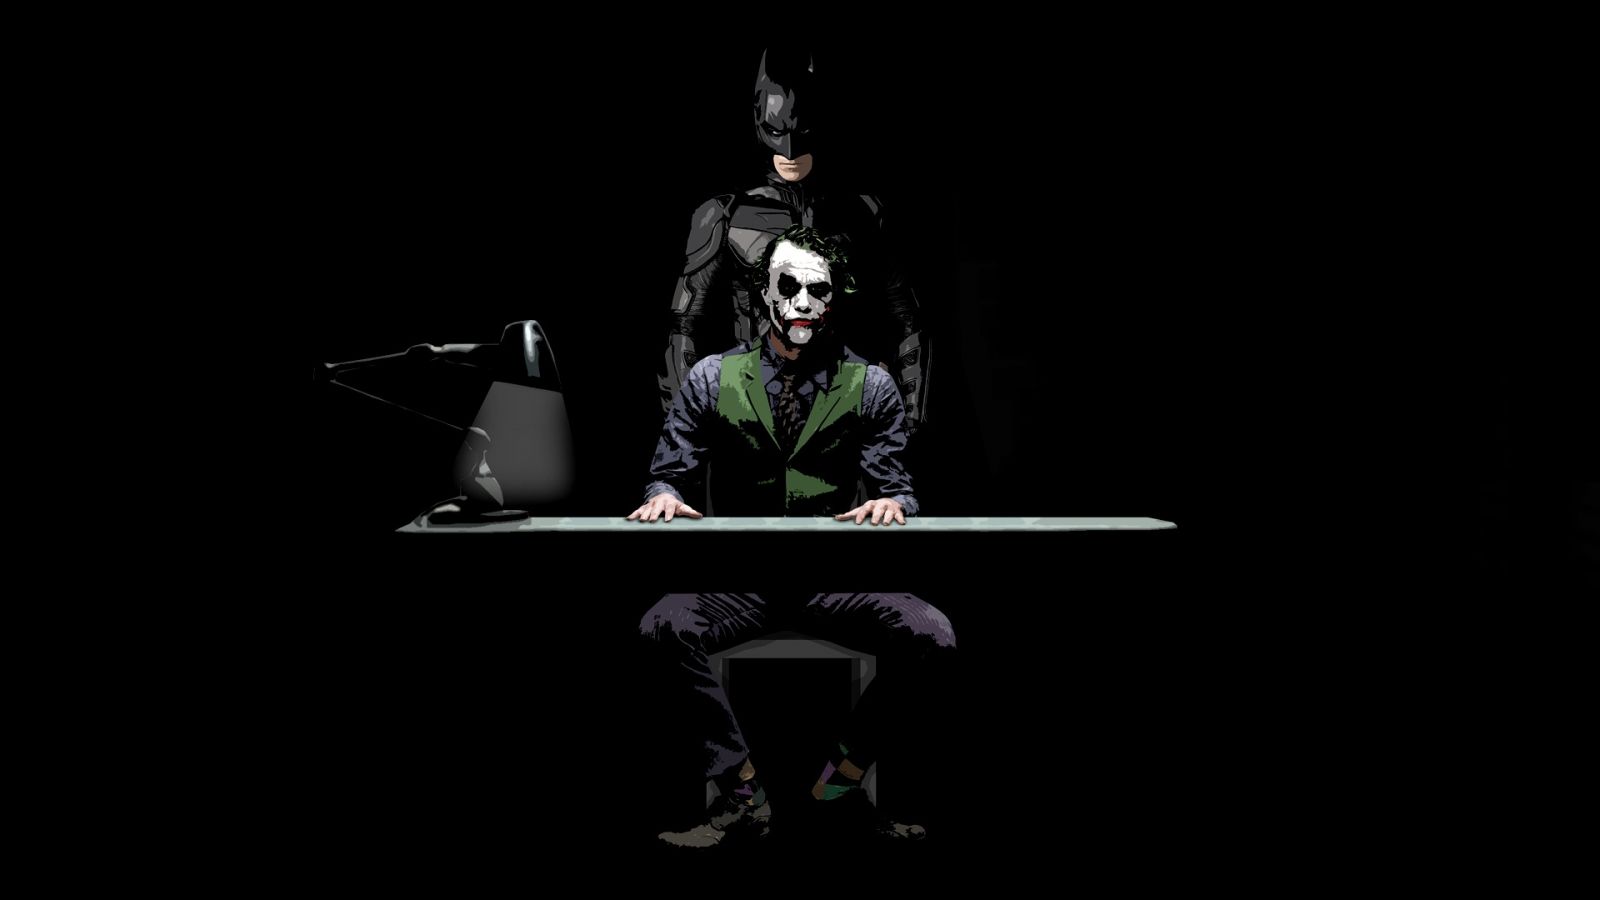 Free download Batman and Joker Sketch 3D Wallpaper HQ Wallpaper download 100 [1920x1080] for your Desktop, Mobile & Tablet. Explore Joker Wallpaper Free Download. Batman And Joker Wallpaper, Joker